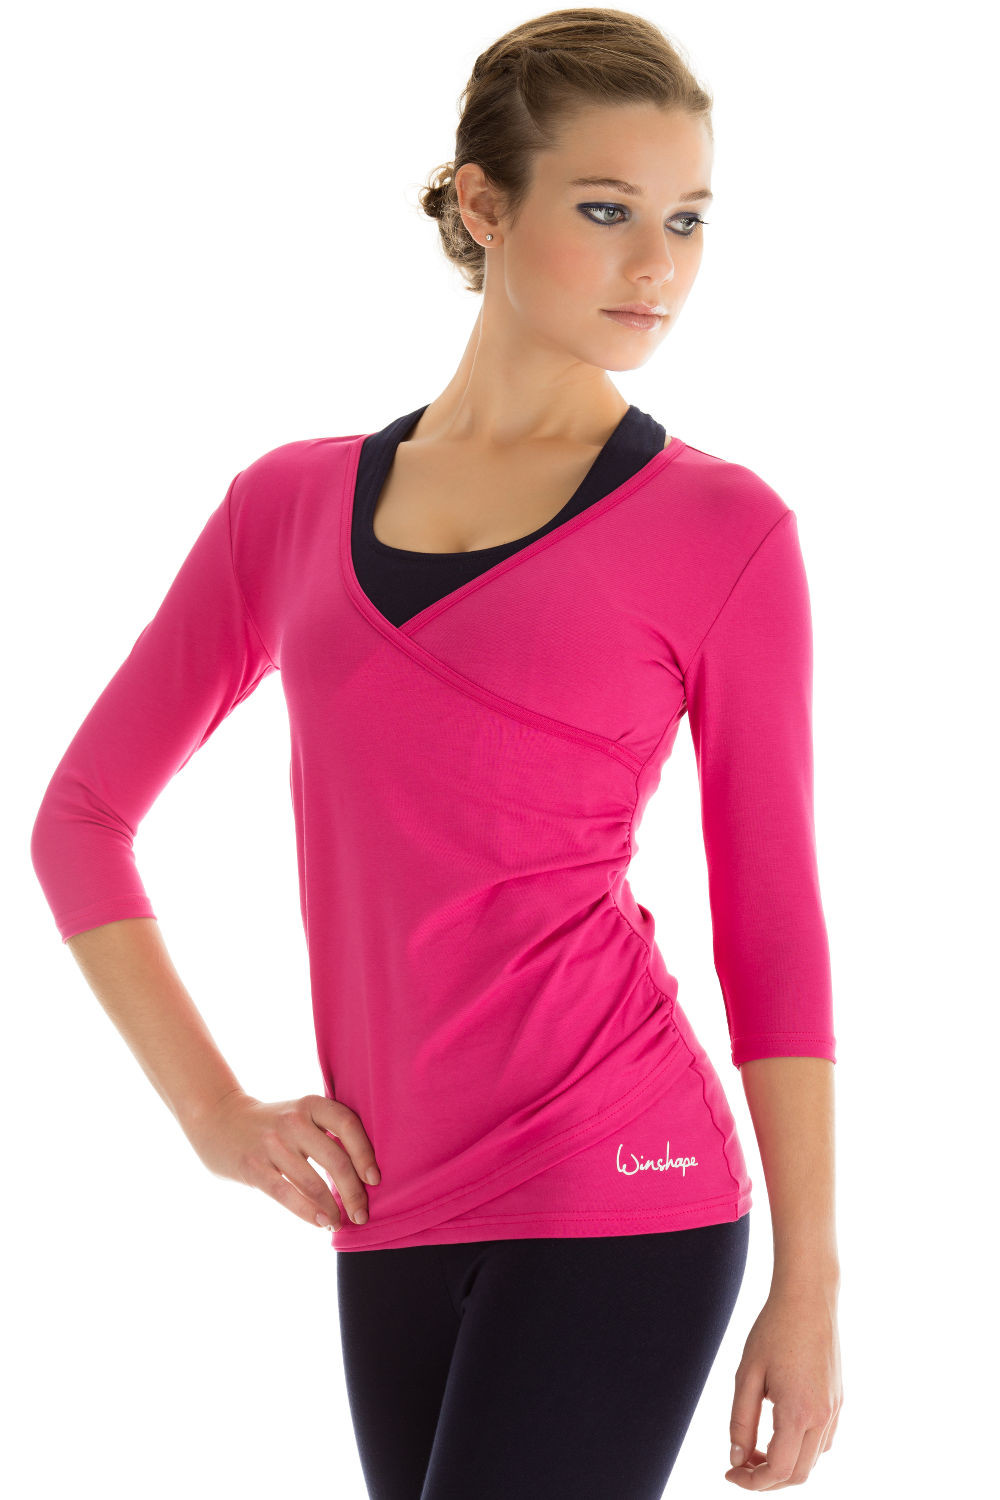 Flow Winshape ¾-Arm Style Wickeloptik in WS3, Shirt pink,